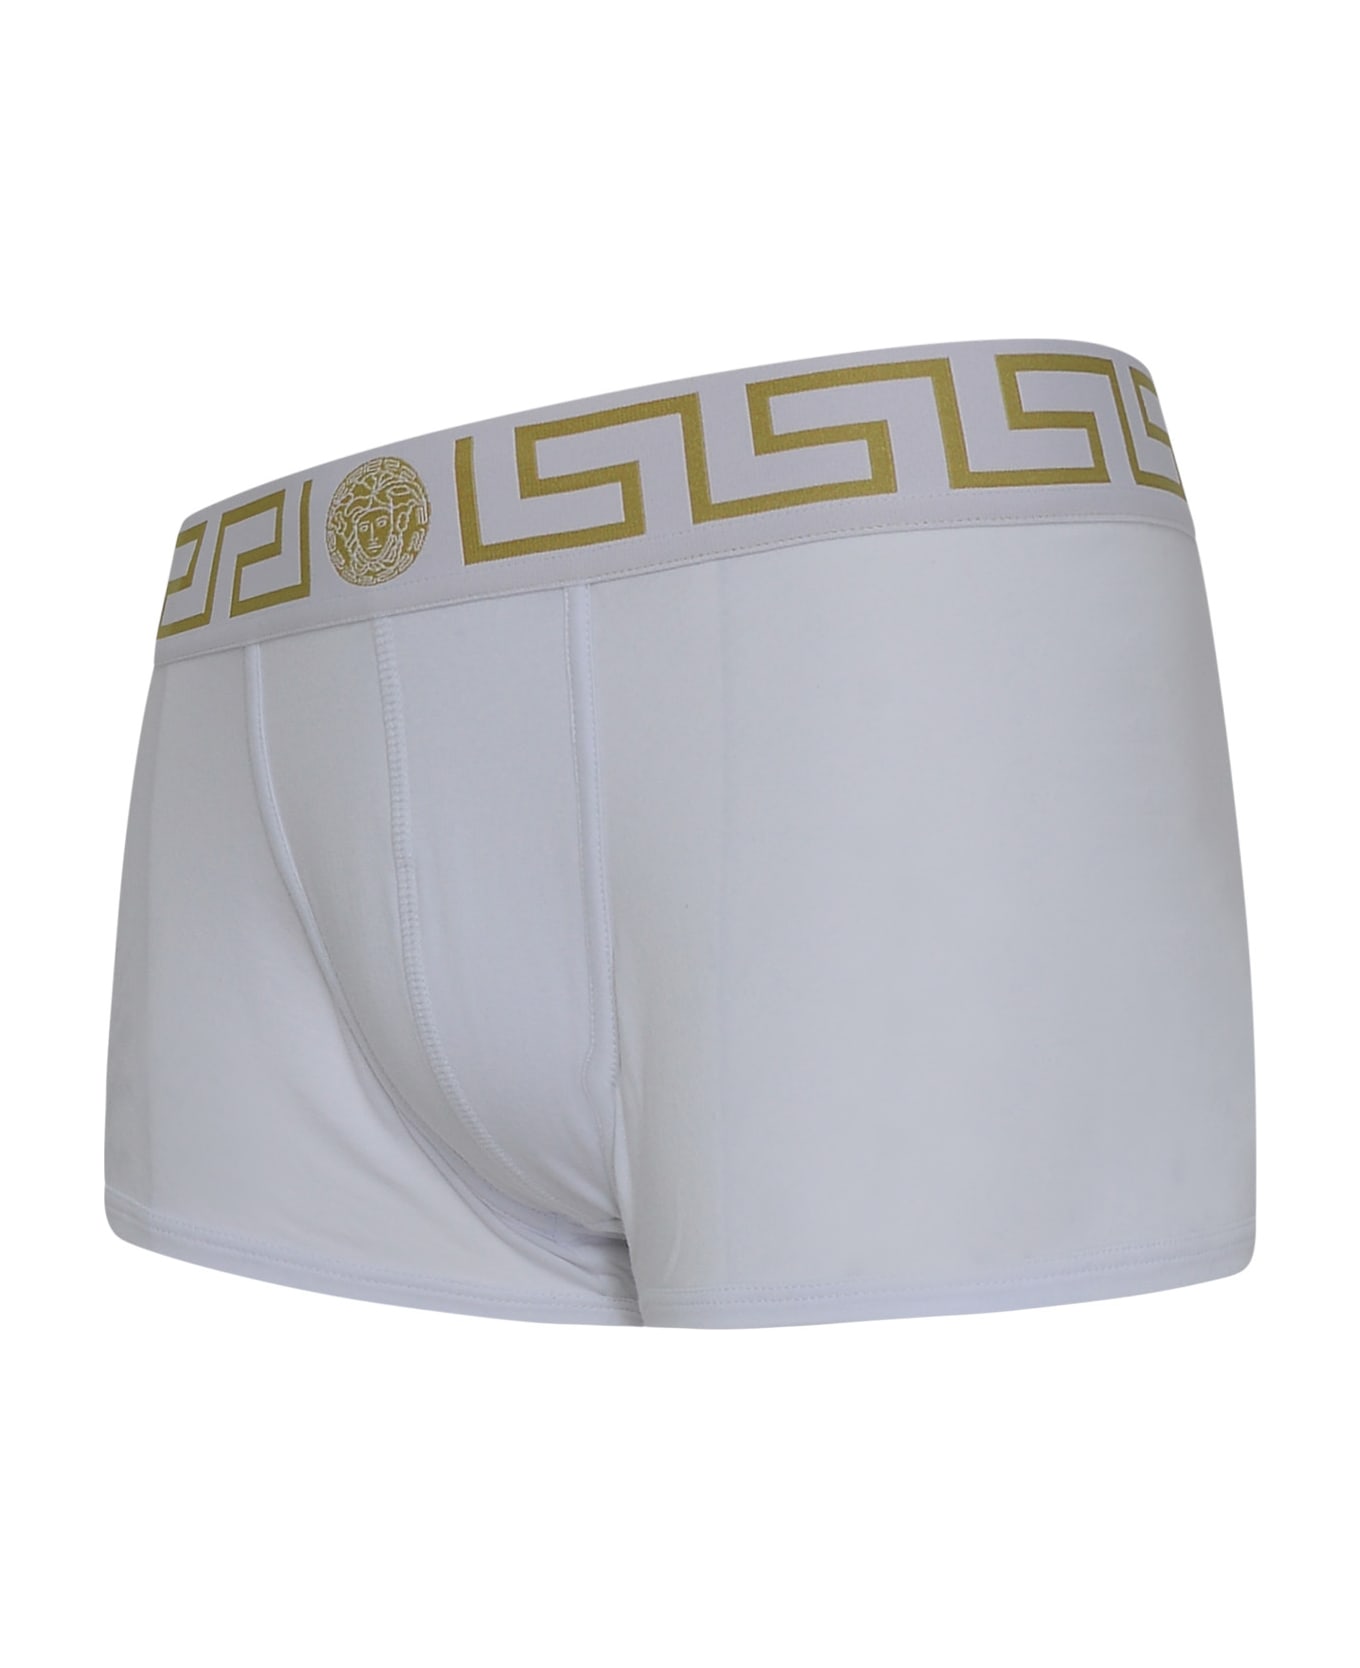 Versace White Cotton Boxer Shorts - BIANCO GRECA ORO